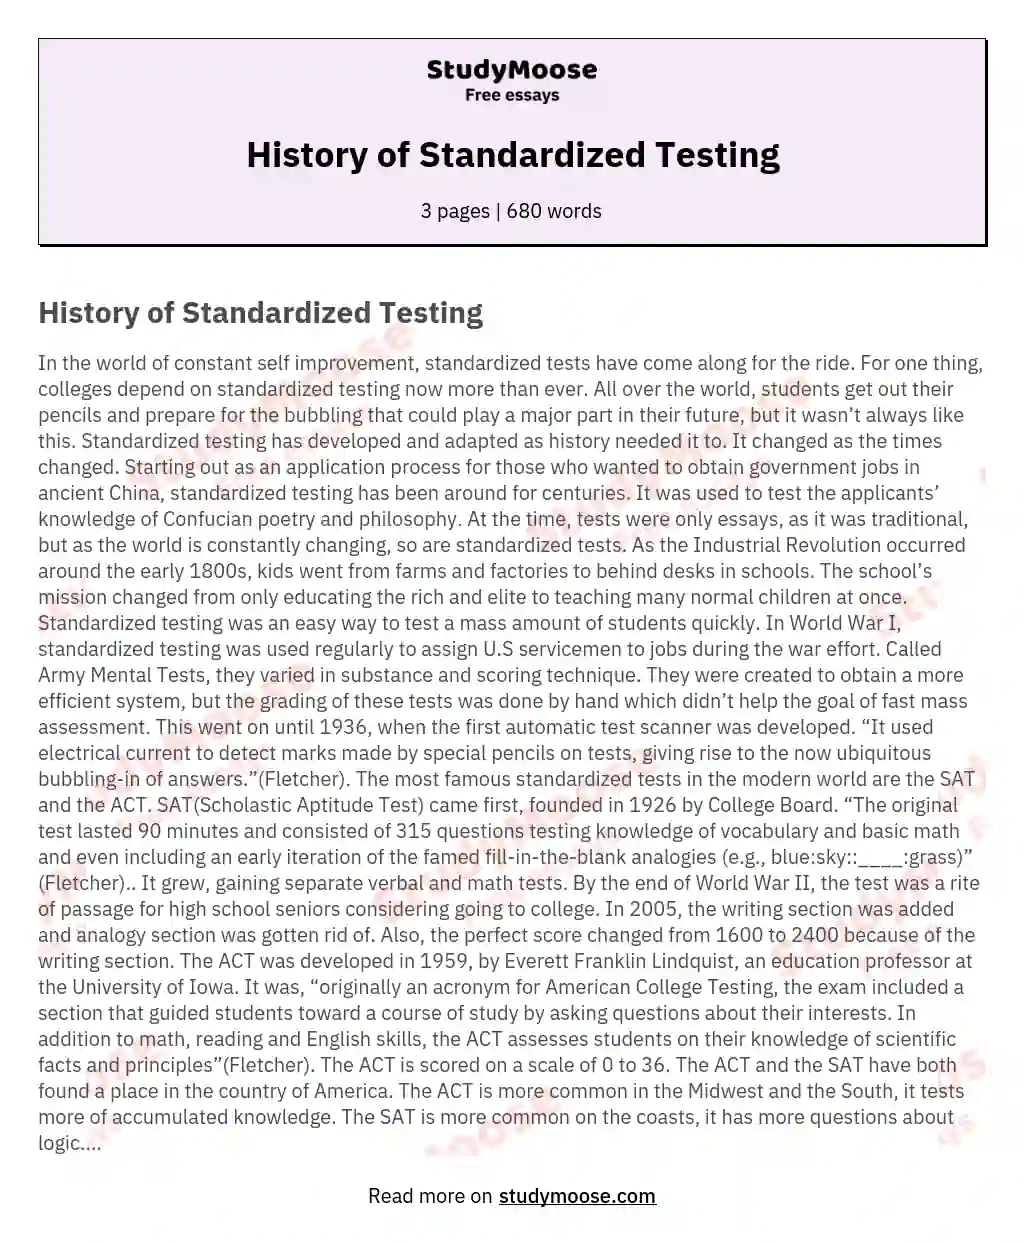 History of Standardized Testing